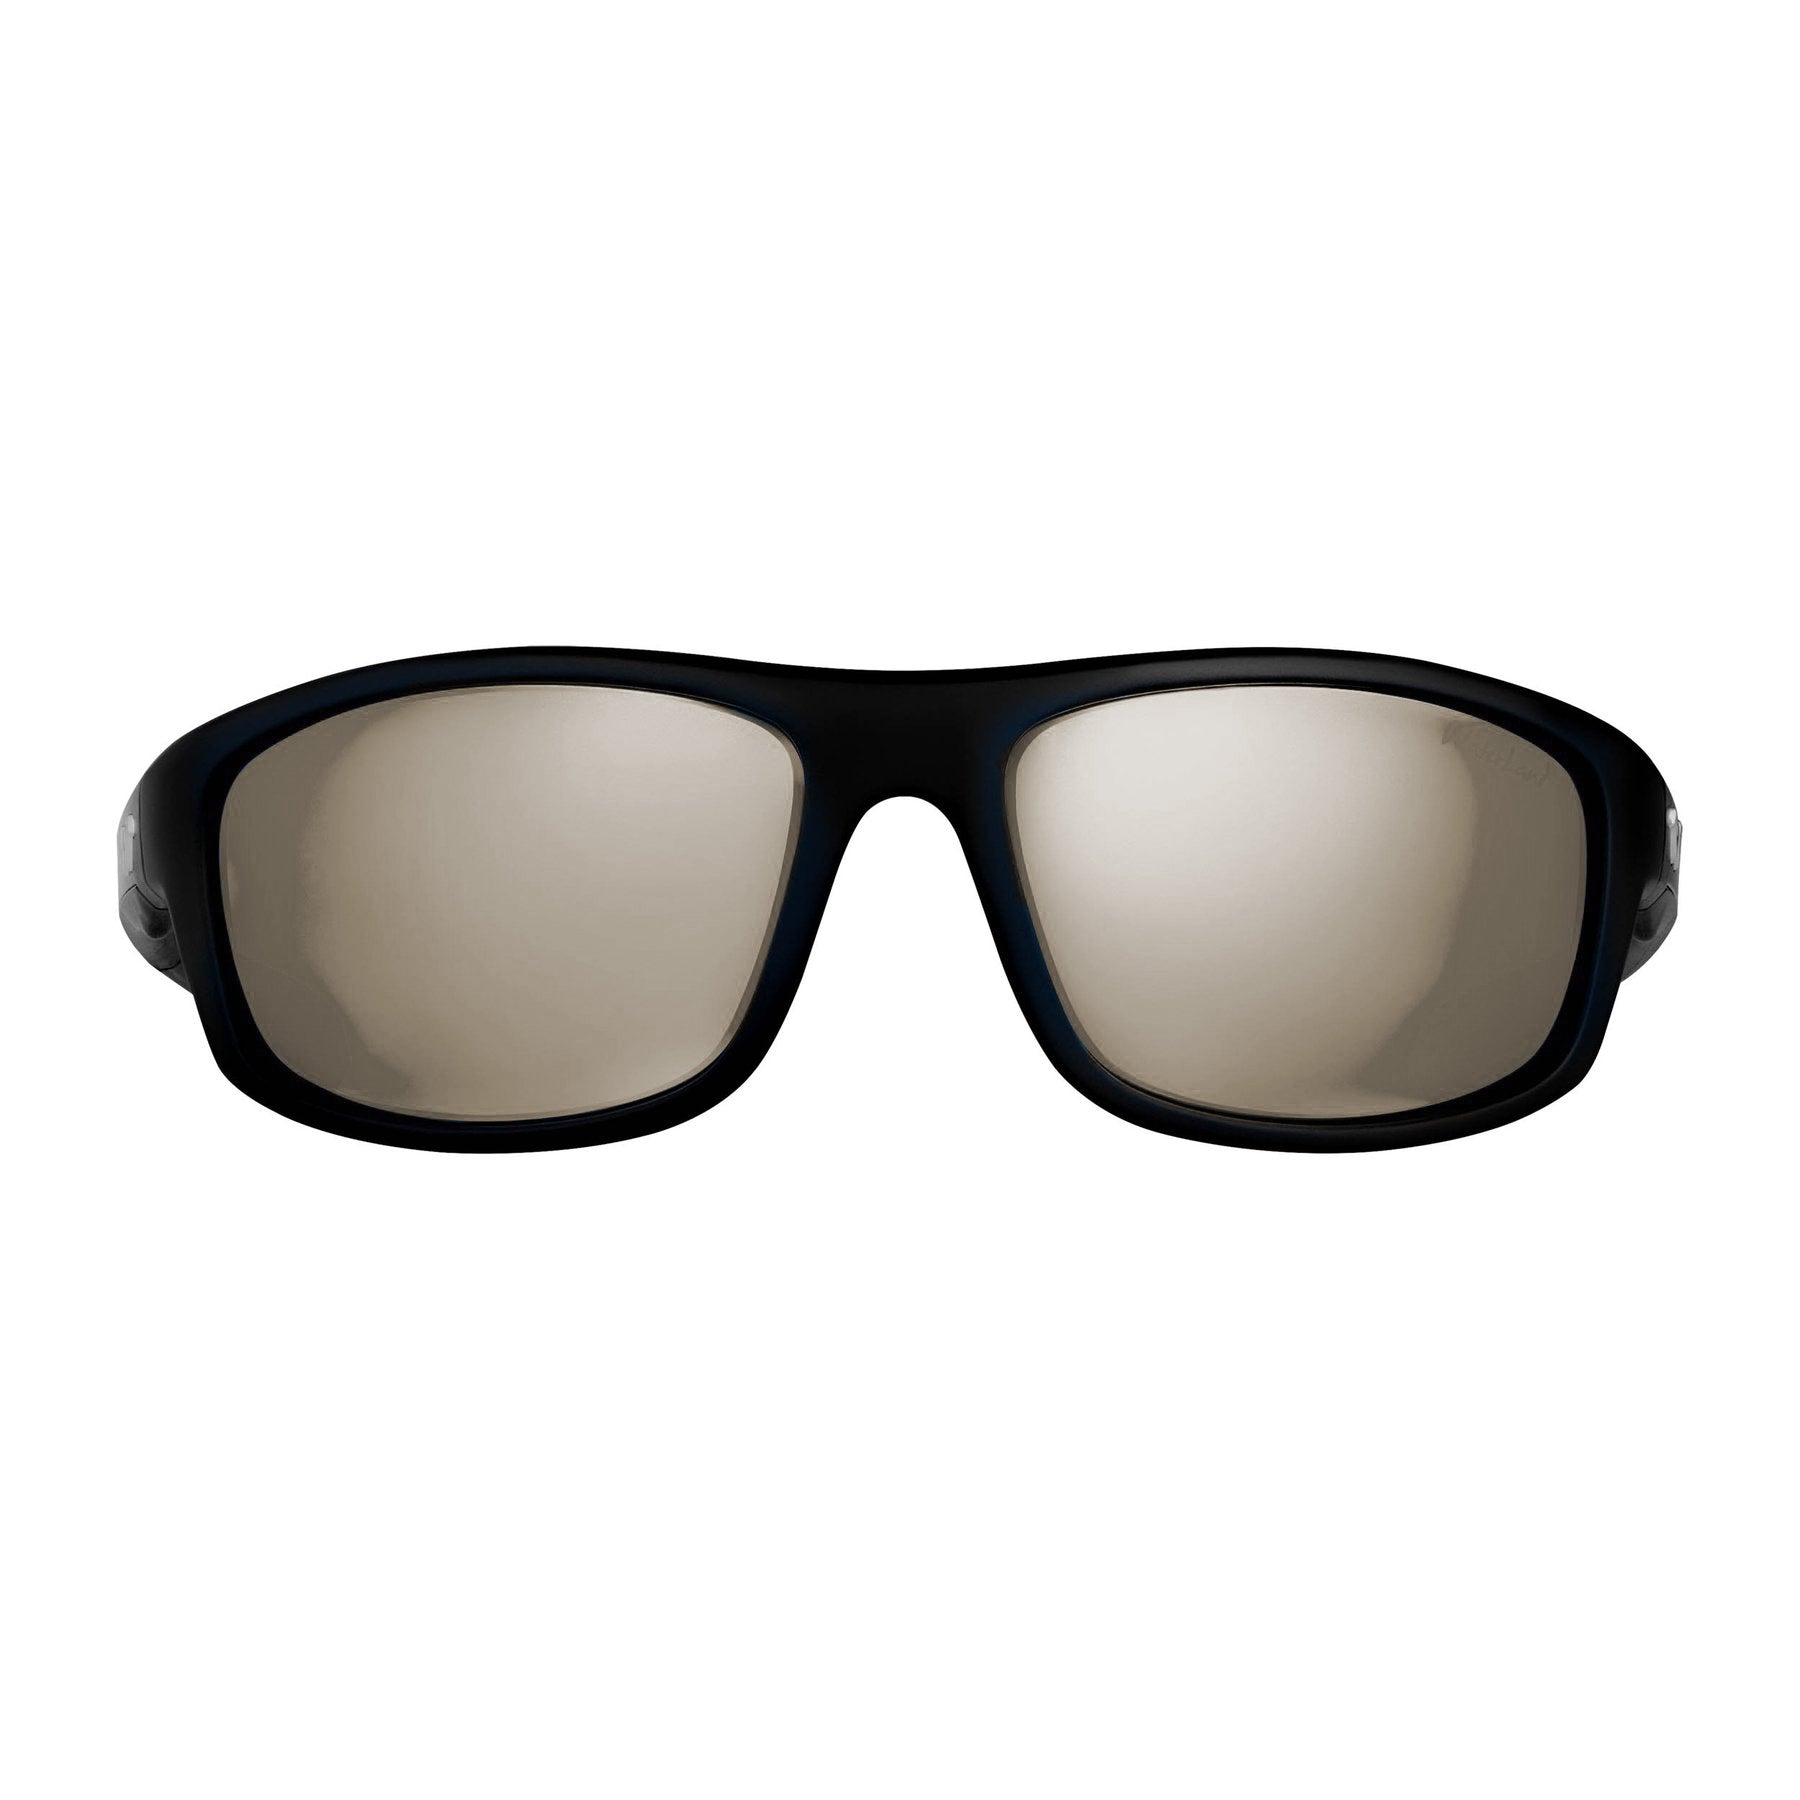 Waterland Fishing Sunglasses Hasket / Black / SilverSight Mirror Glass